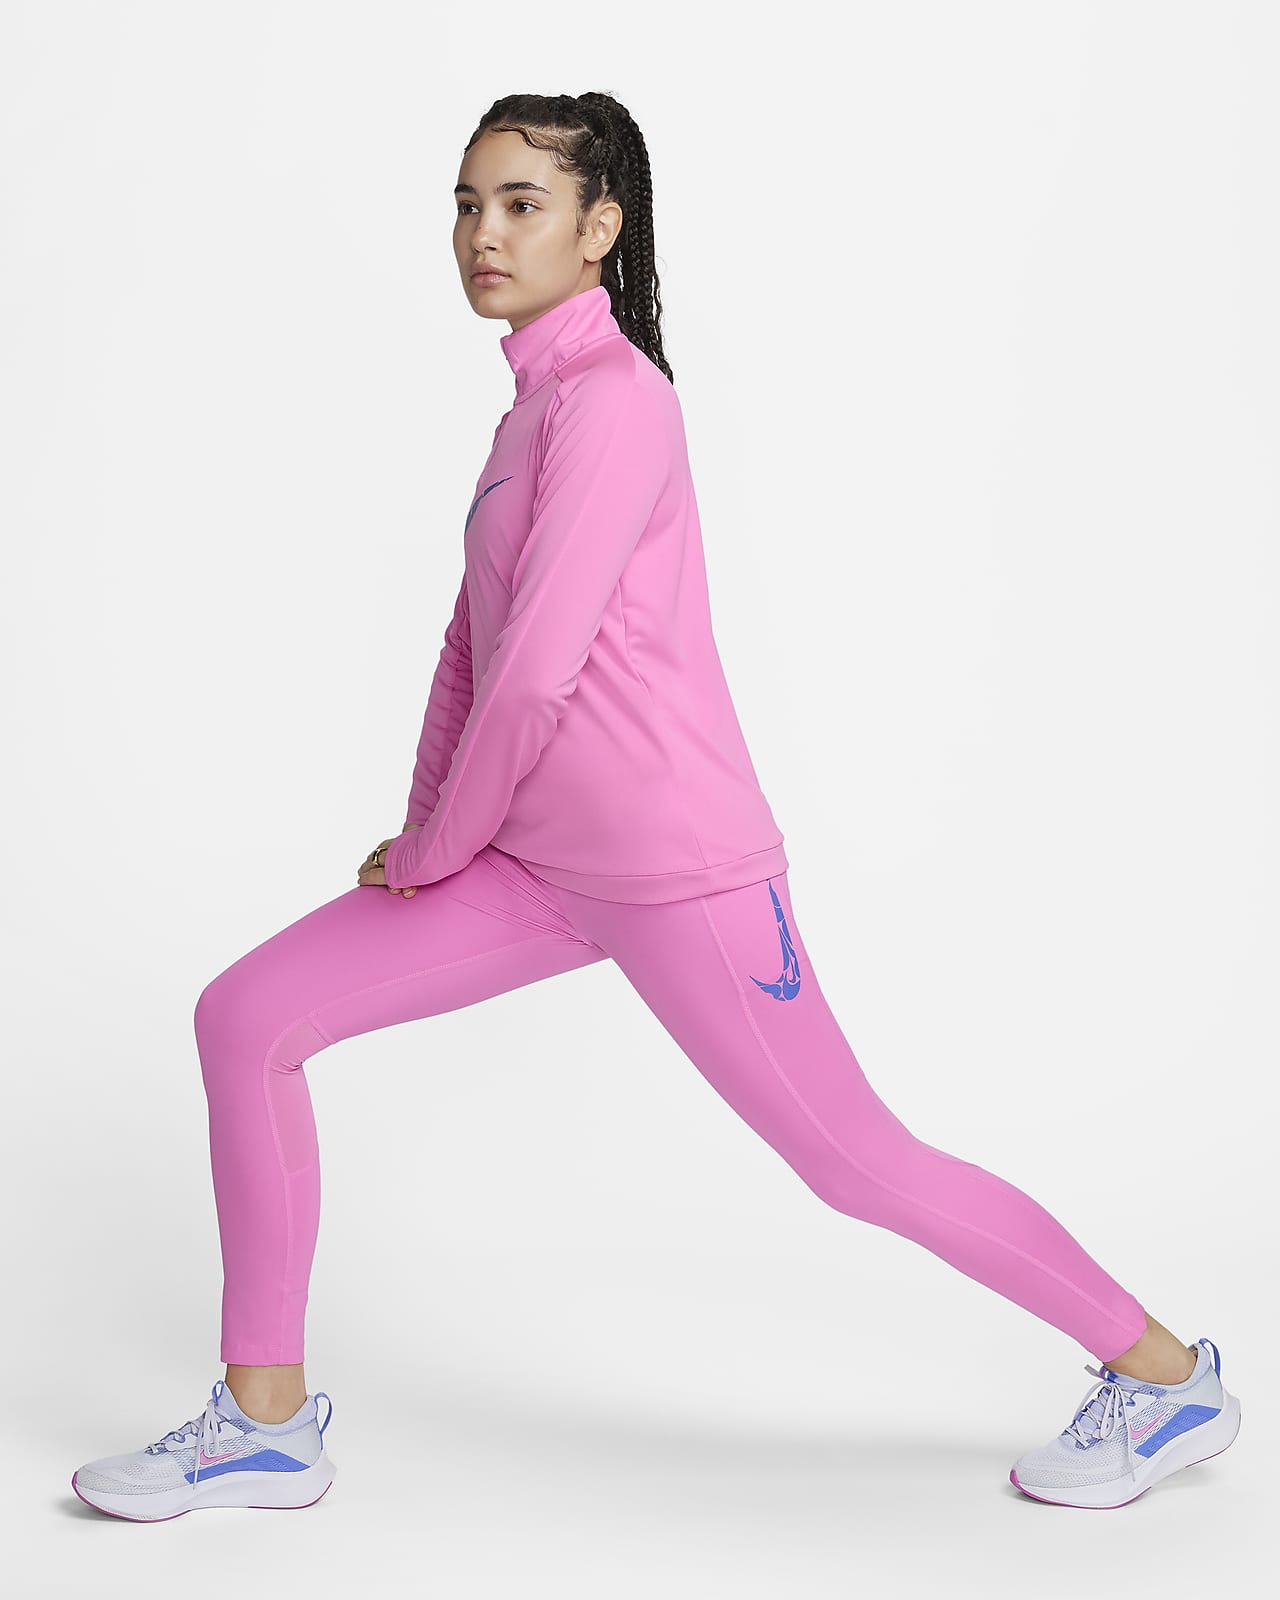 Nike | Pants & Jumpsuits | Nike Pro Womens S Hyperwarm Training Fleece  Lined Tights Leggings Static Running | Poshmark